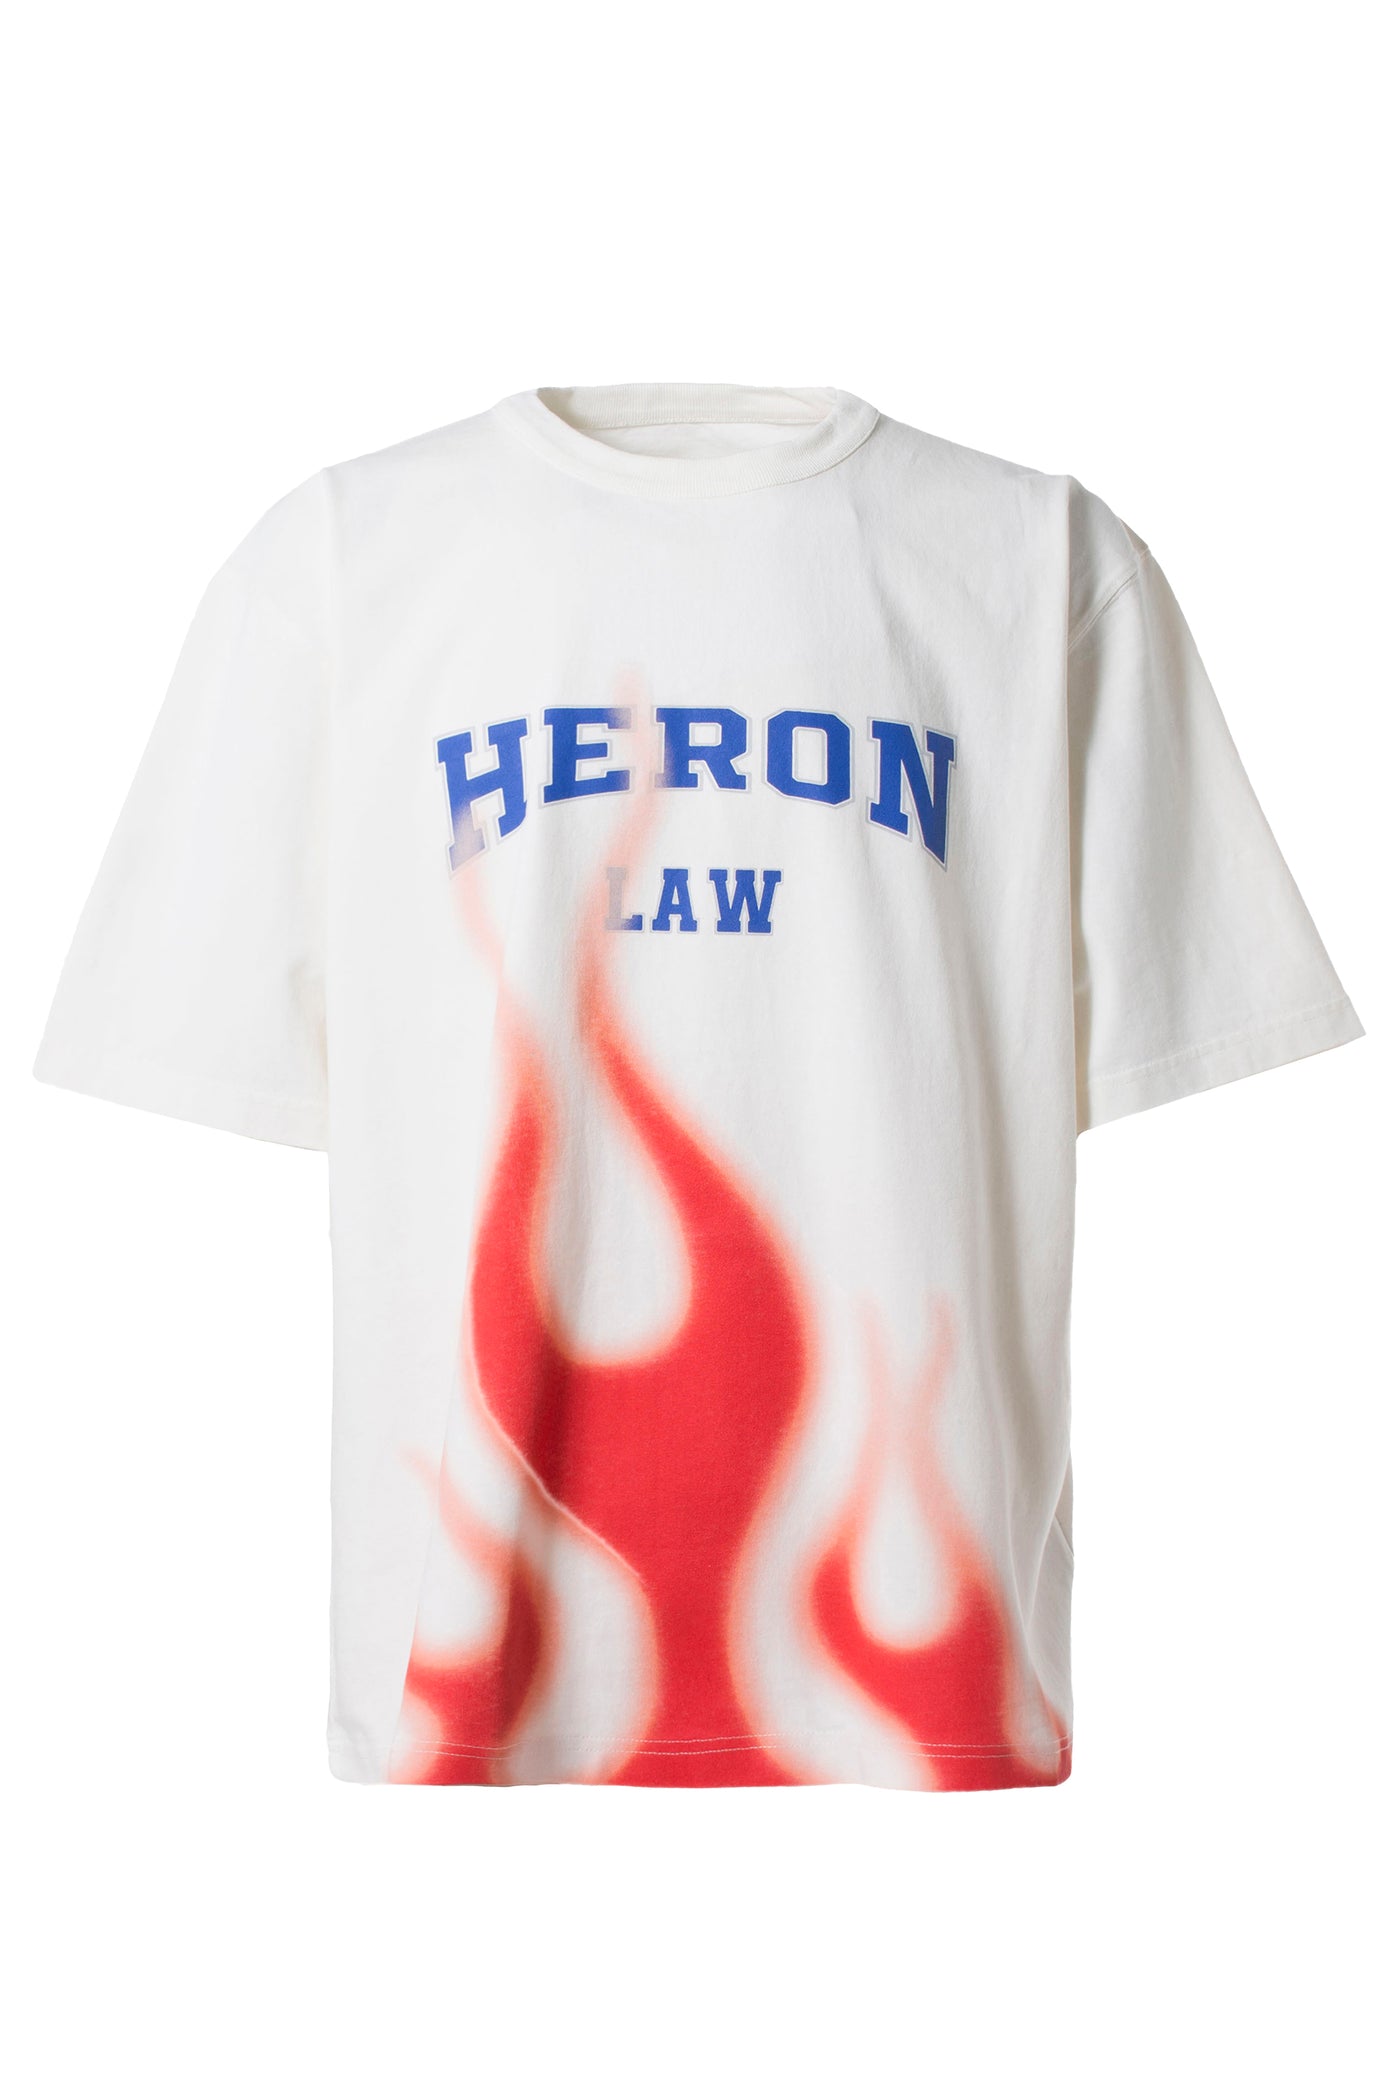 Heron Preston ヘロンプレストン SS23 HERON LAW FLAMES SS TEE / WHT RED -NUBIAN